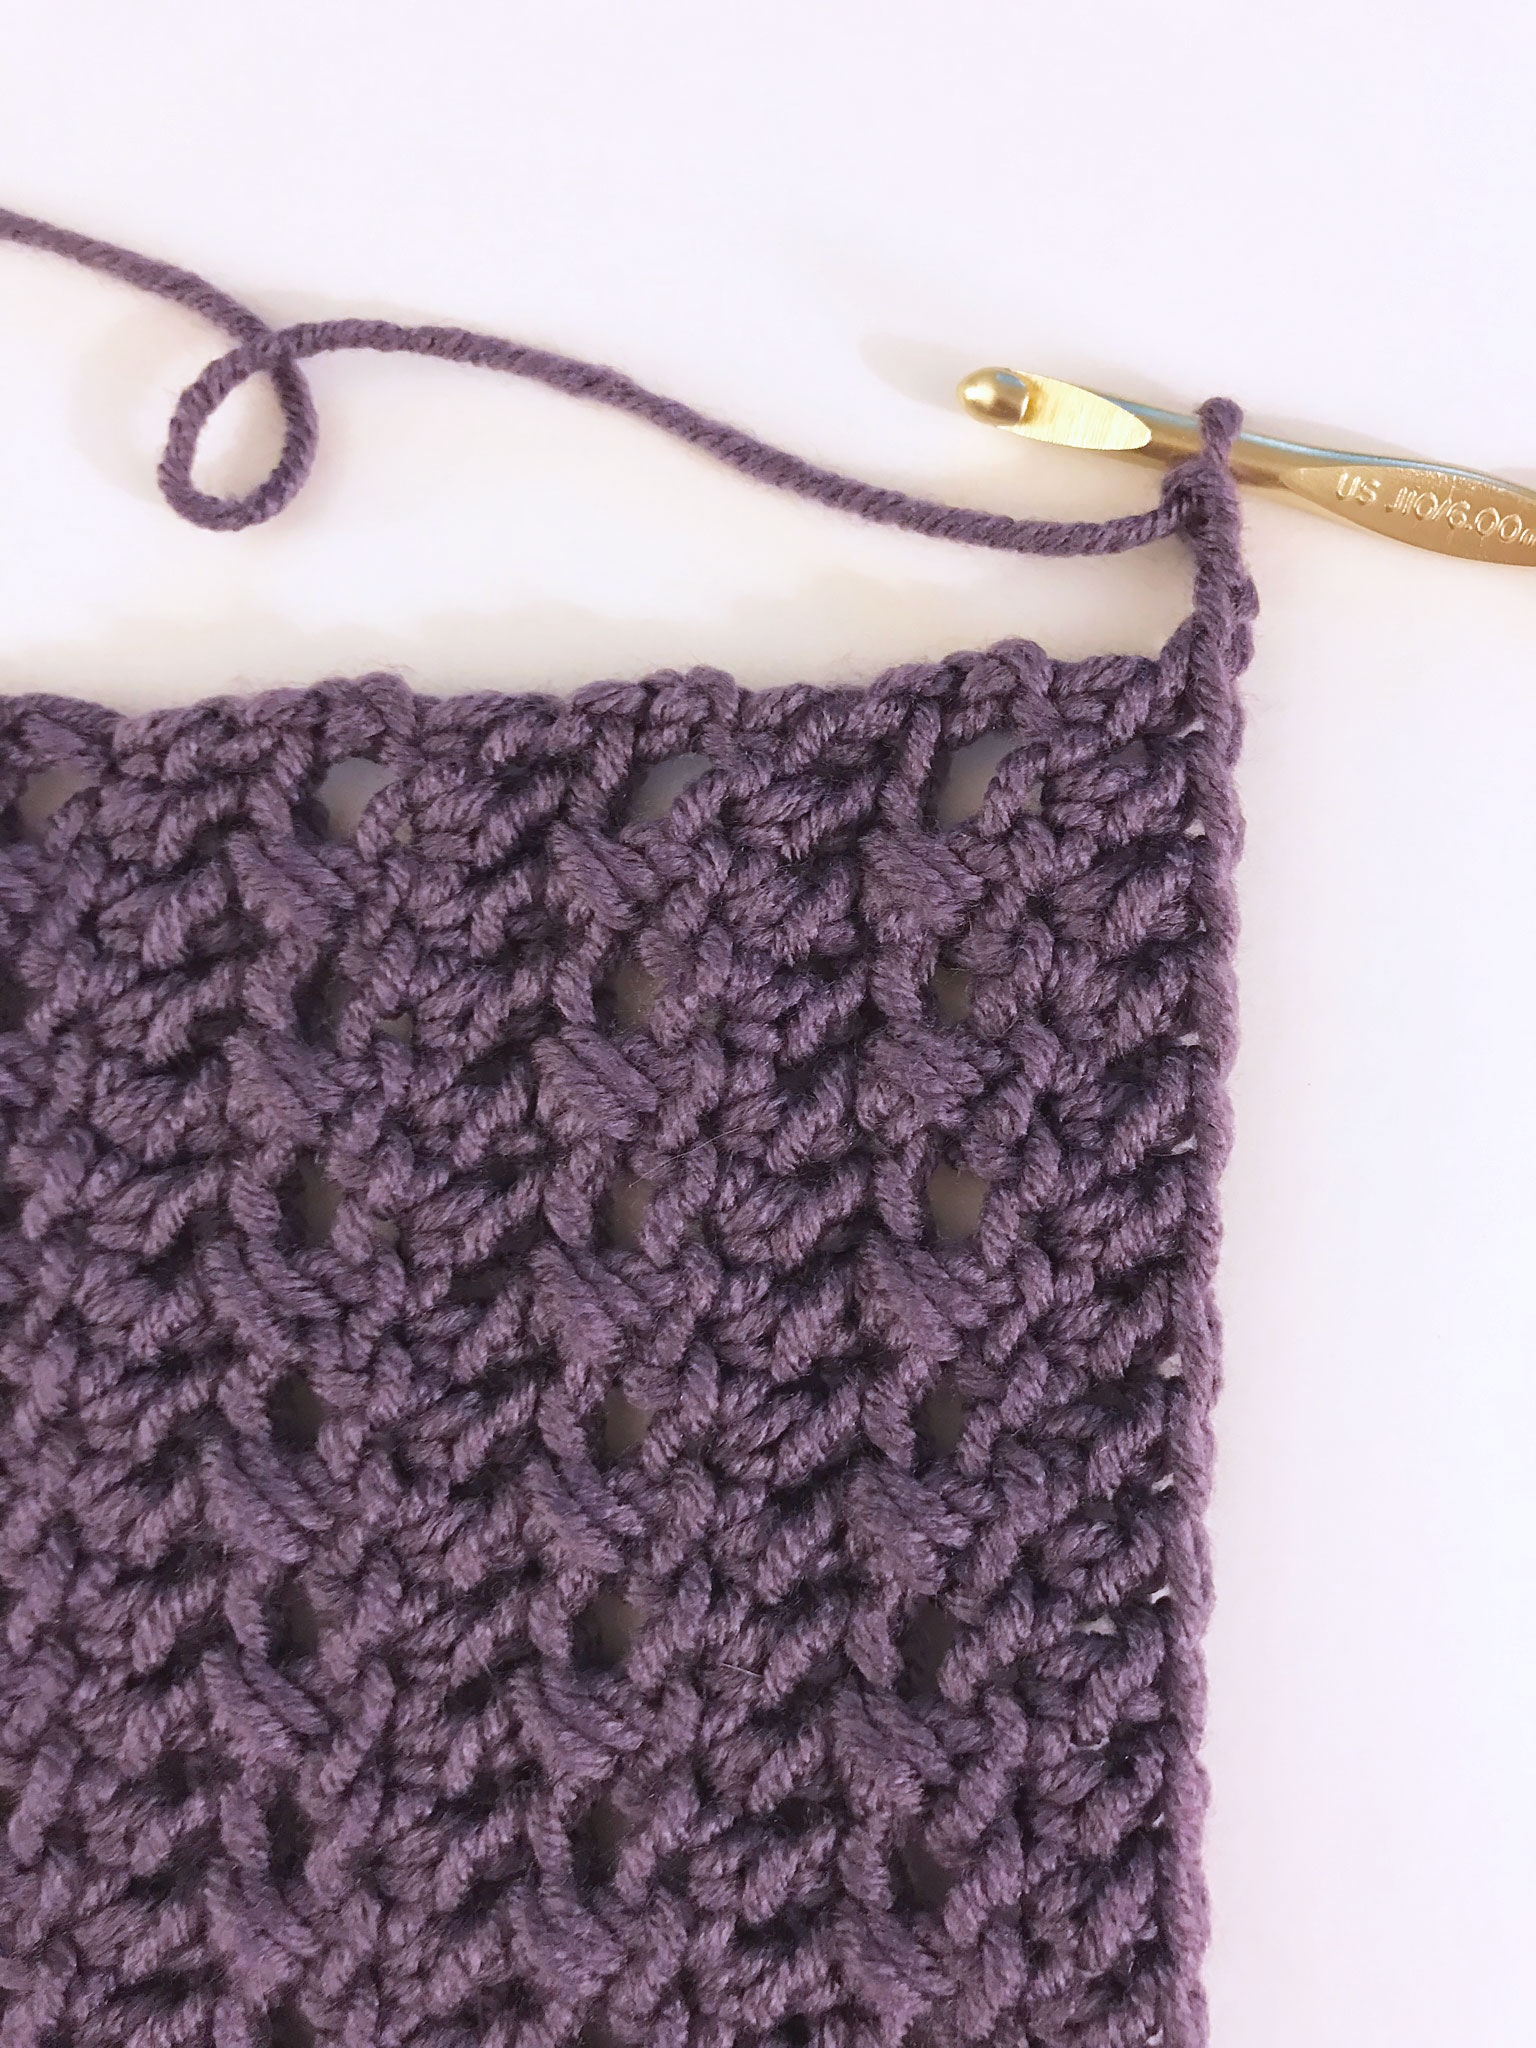 Textured Woodland Crochet Cowl